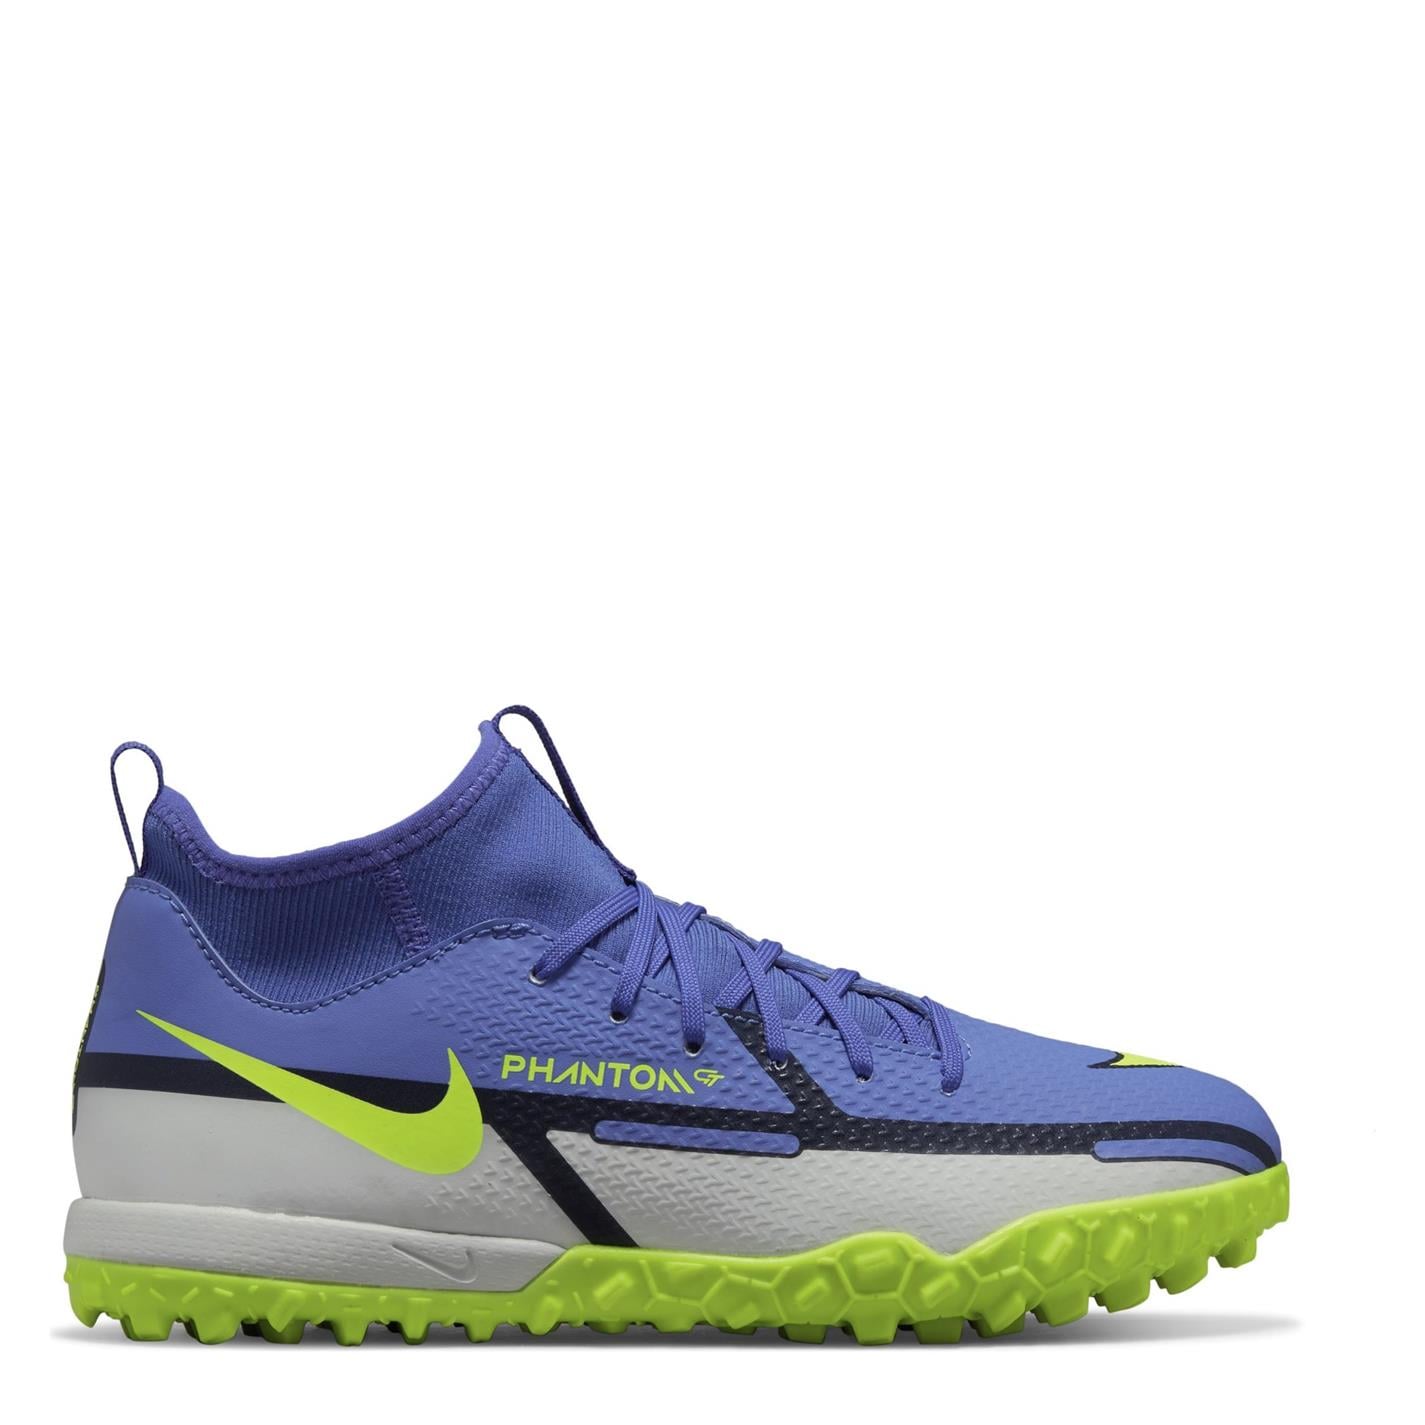 Adidasi Gazon Sintetic Nike Phantom GT Academy DF pentru copii albastru galben